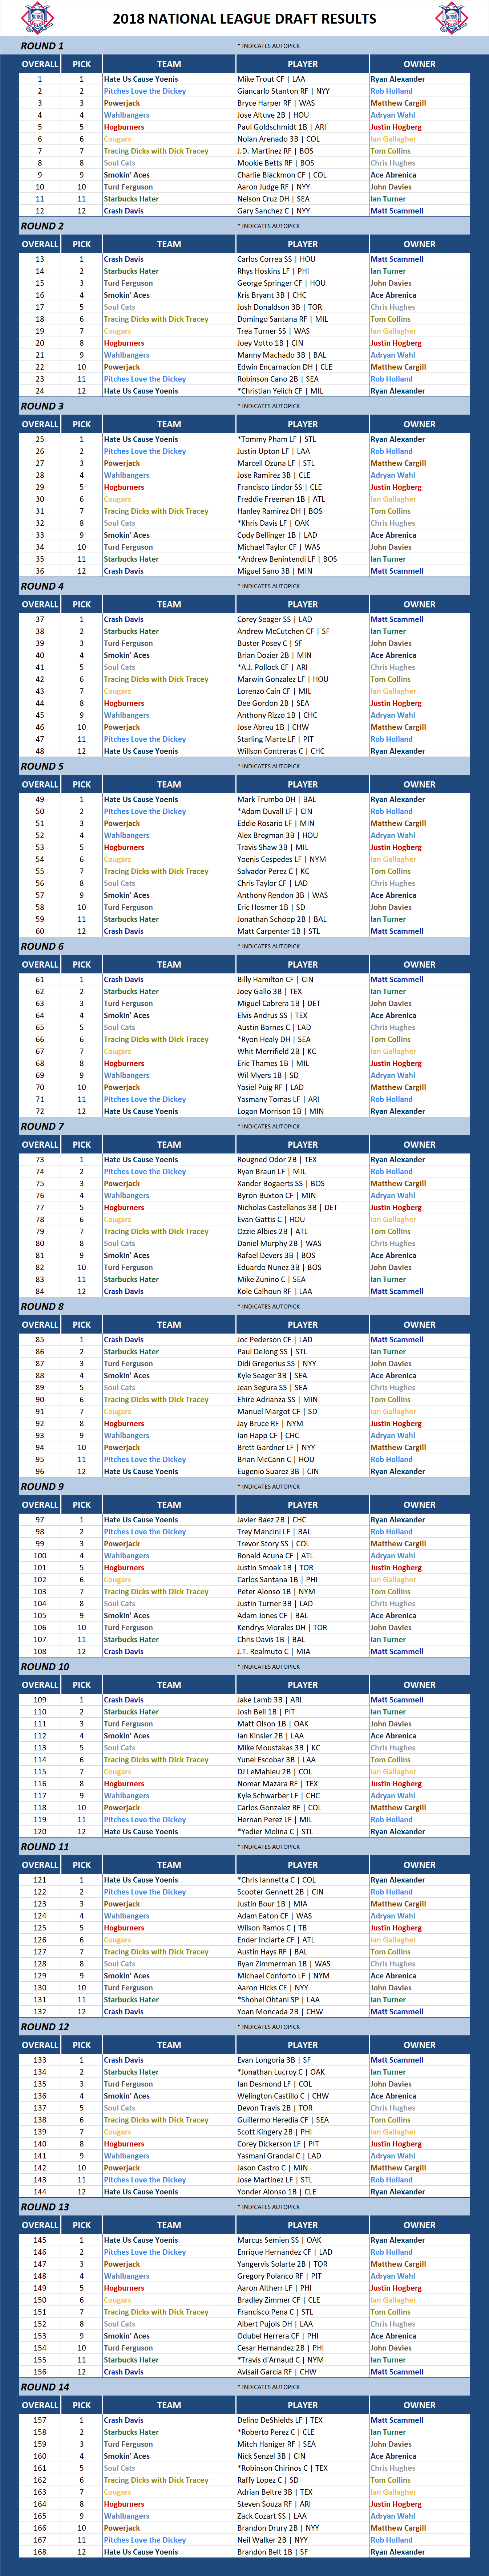 2018 Major league Baseball Draft Results